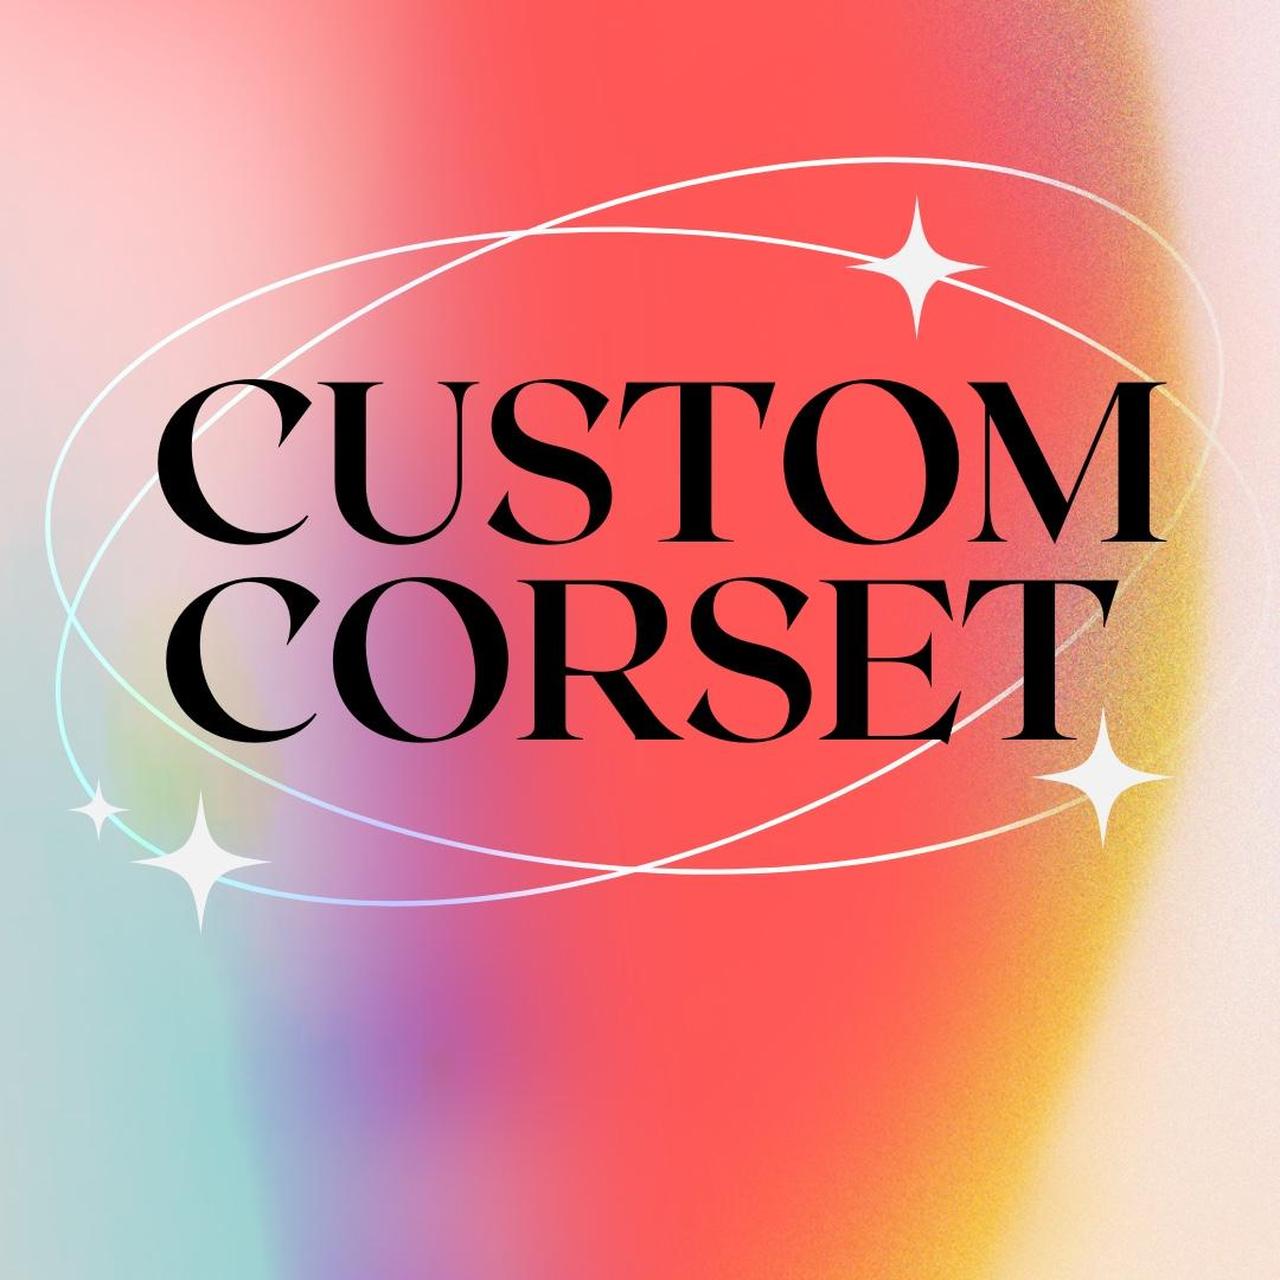 CUSTOM CORSET!! Custom corset - hand made by me!... - Depop